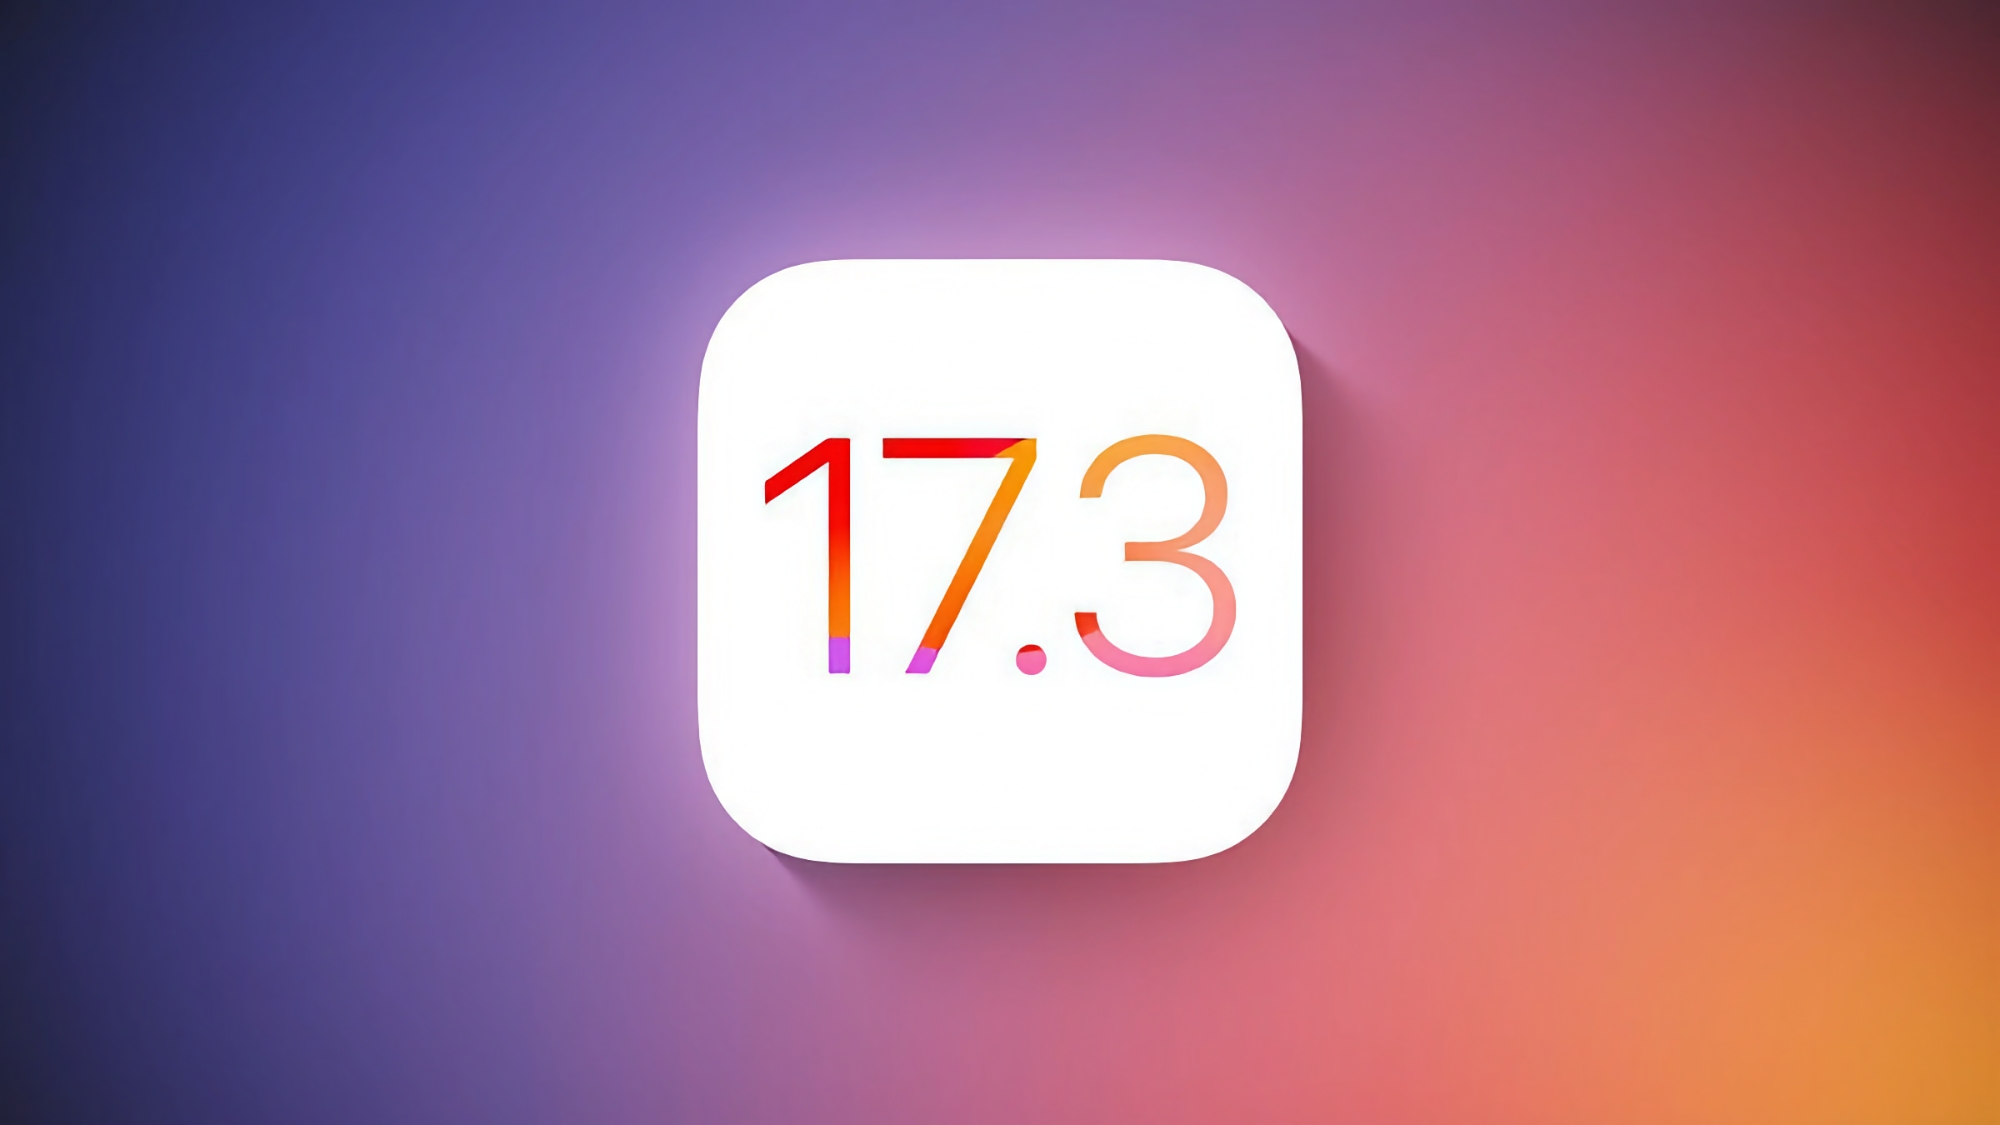 Apple has started testing iOS 17.3 Beta 3